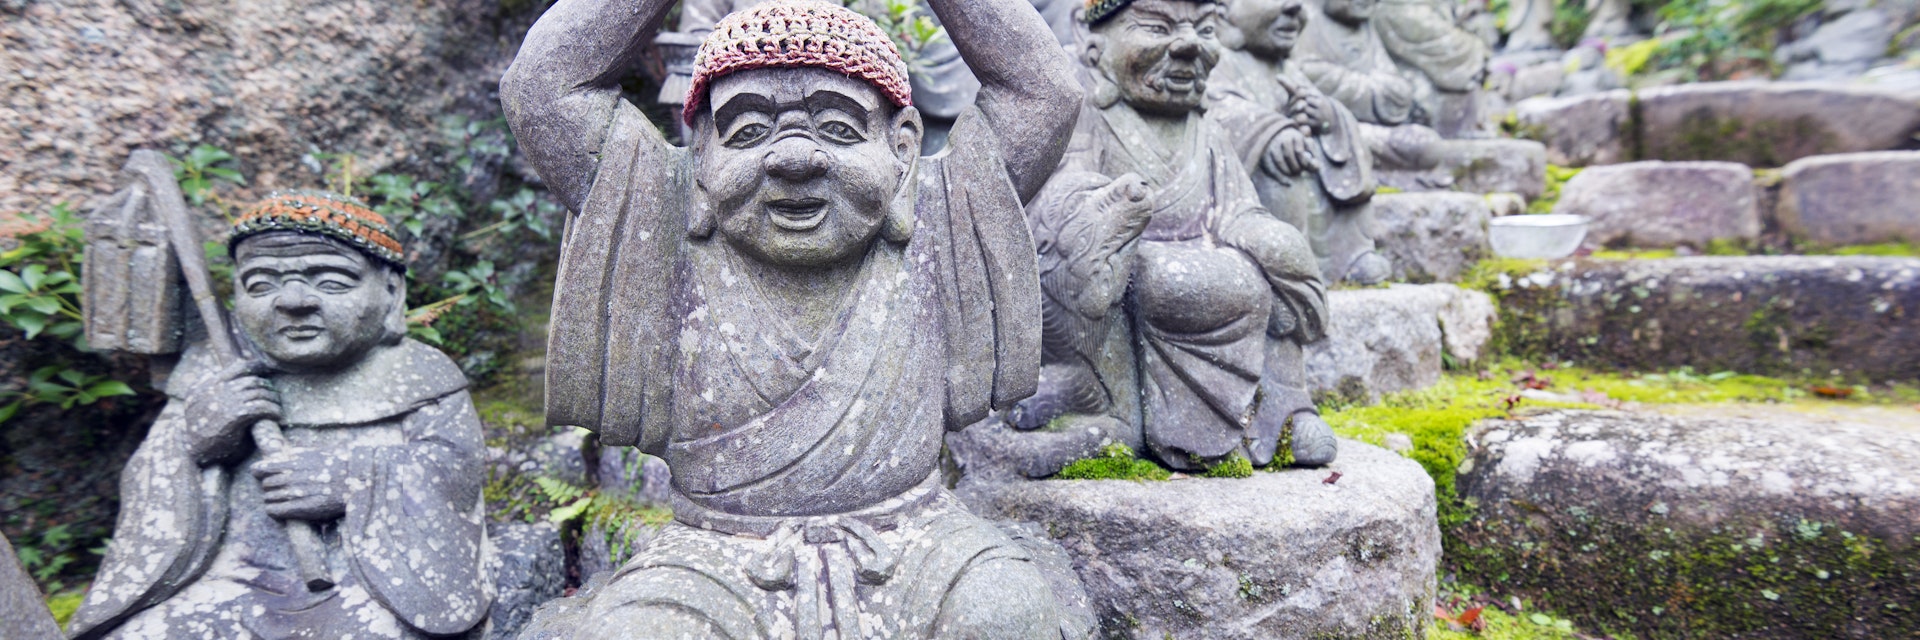 Asia, Japan, Honshu, Hiroshima prefecture, Miyajima Island, Statues in Daisho in temple